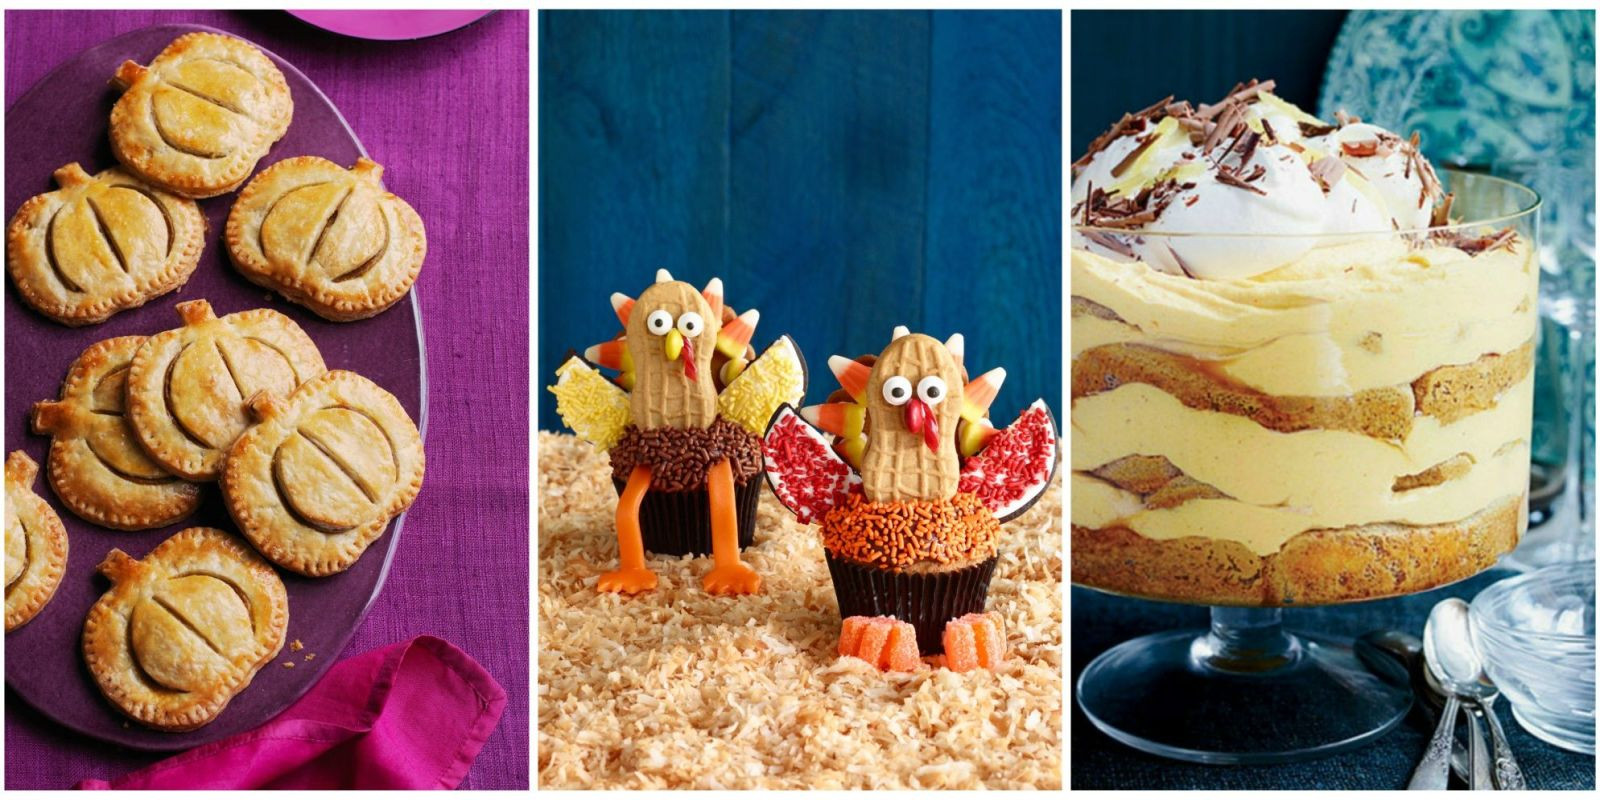 Festive Thanksgiving Desserts
 35 Easy Thanksgiving Desserts Best Recipes for